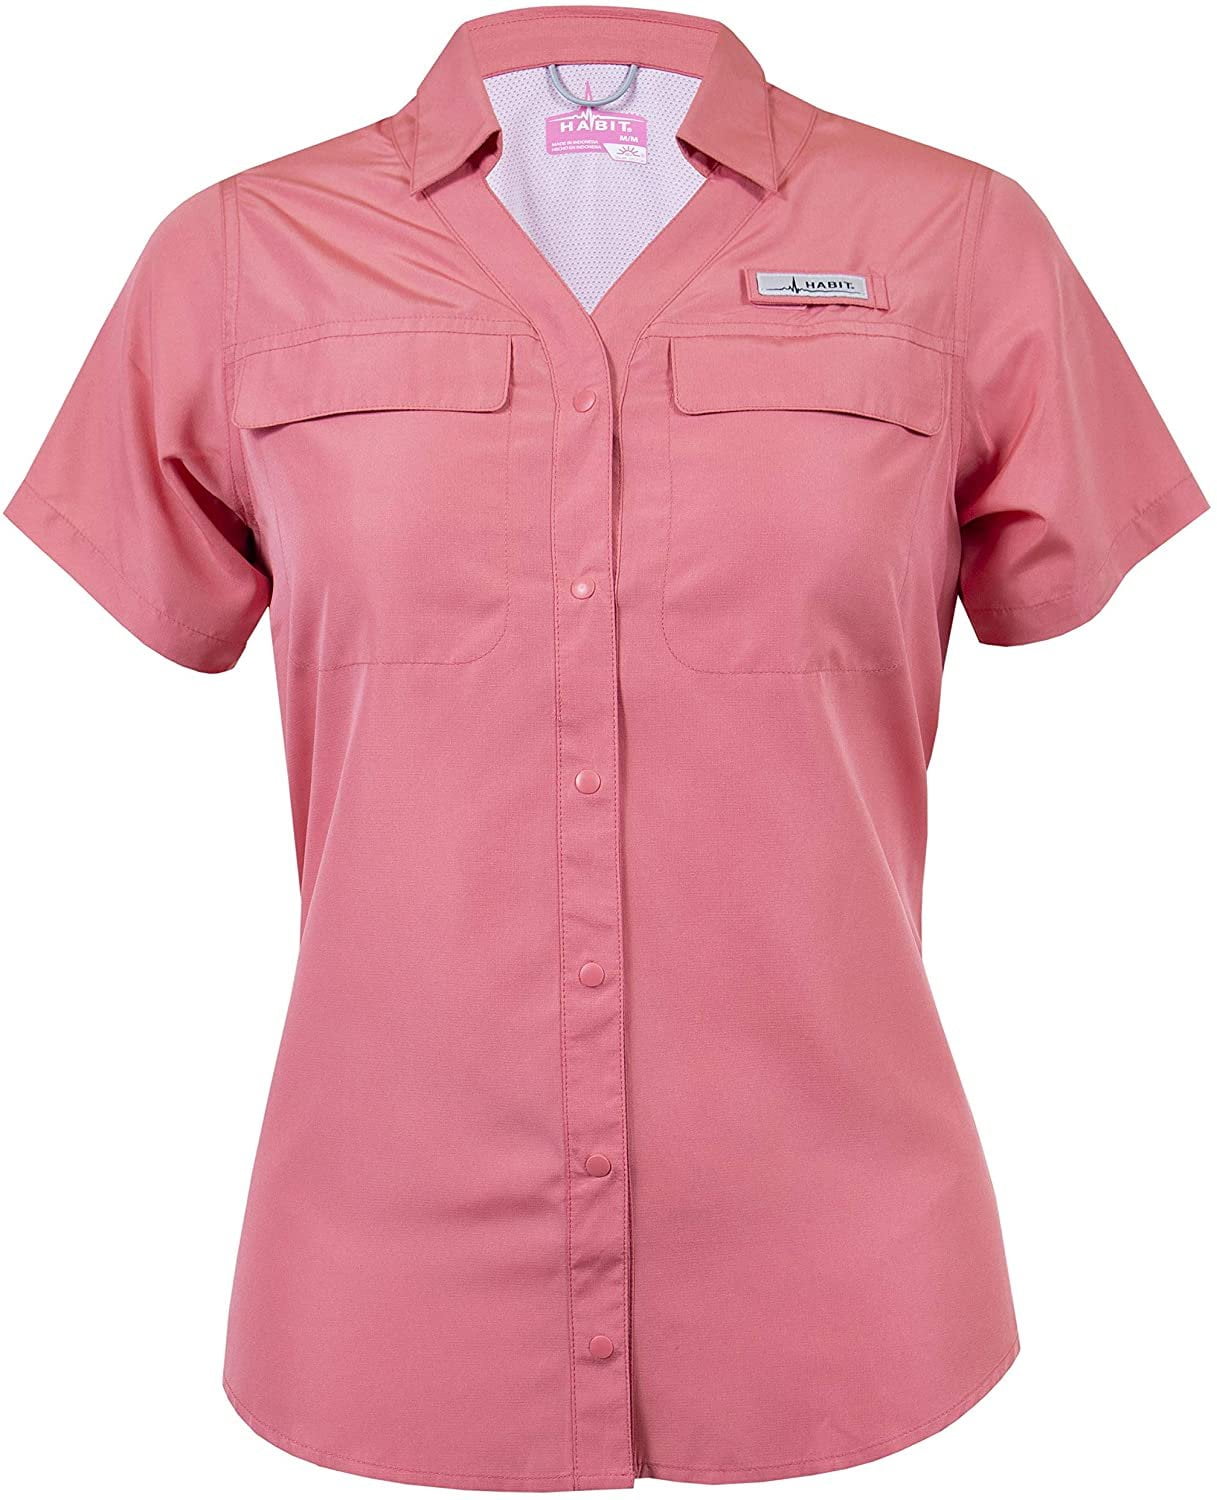 HABIT Women's Fishing Guide Shirt, Tea Rose, X-Large - Short Sleeve 